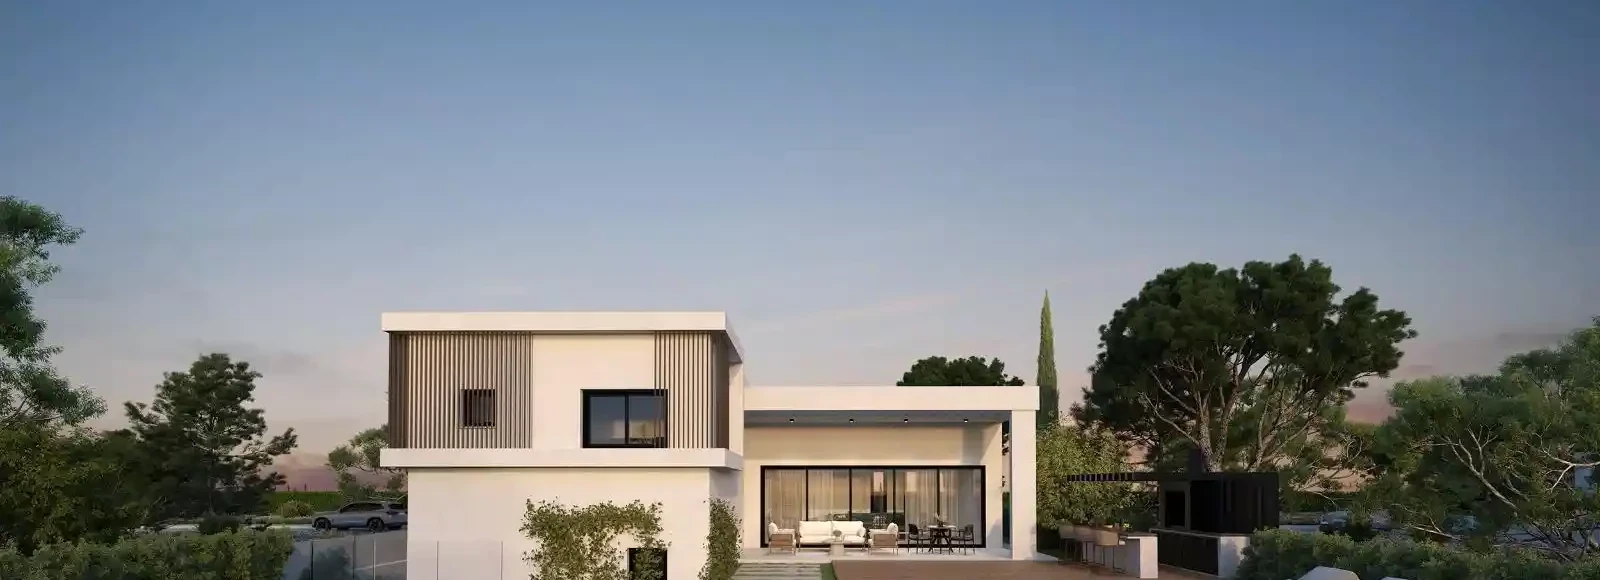 3-bedroom villa fоr sаle €425.000, image 1